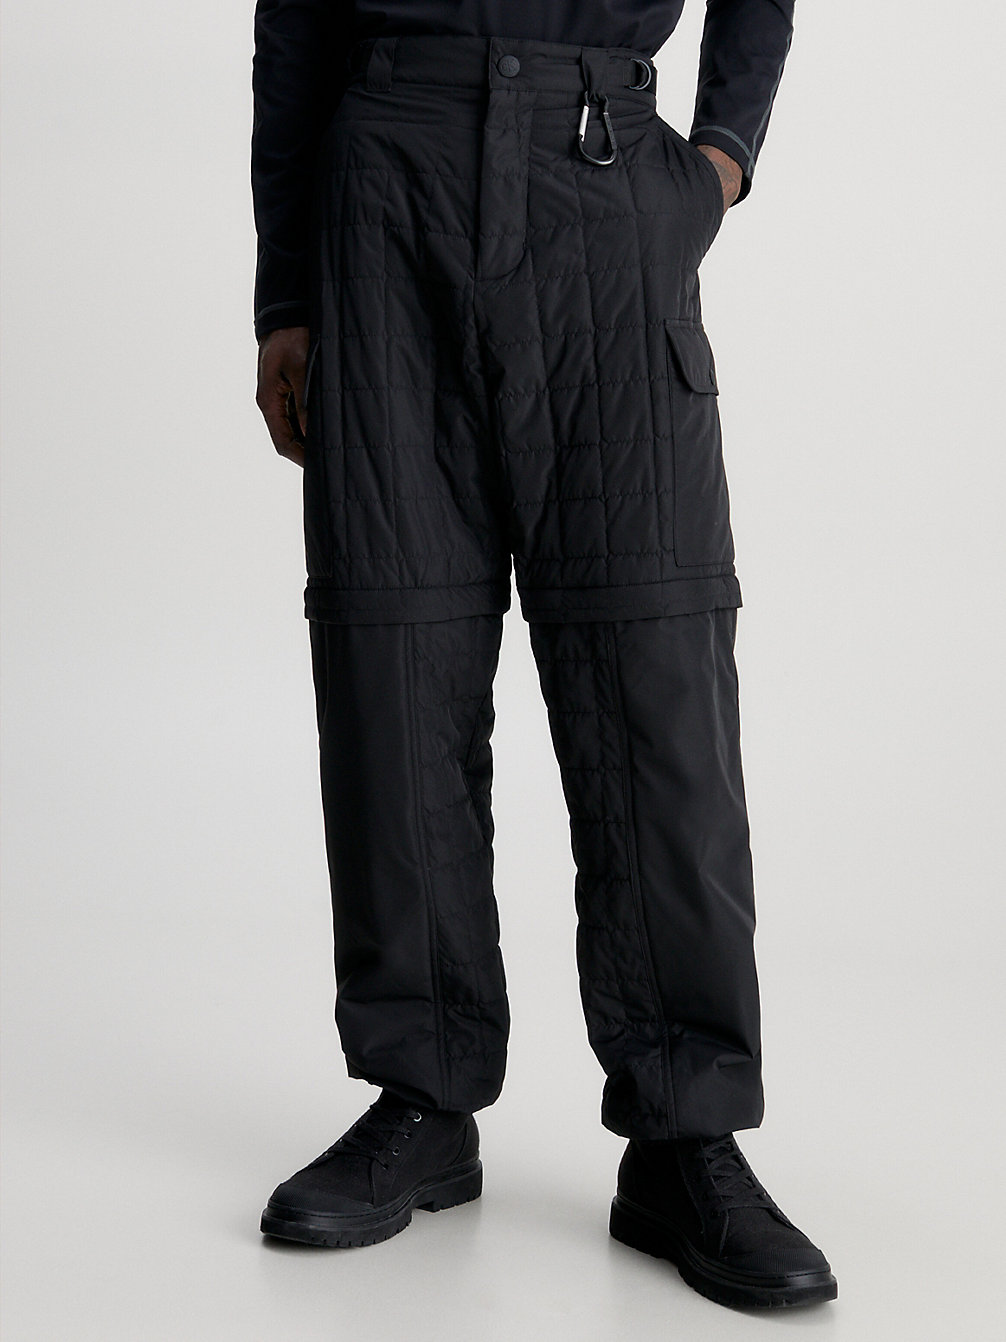 CK BLACK Pantalon Cargo Matelassé 2 En 1 undefined hommes Calvin Klein